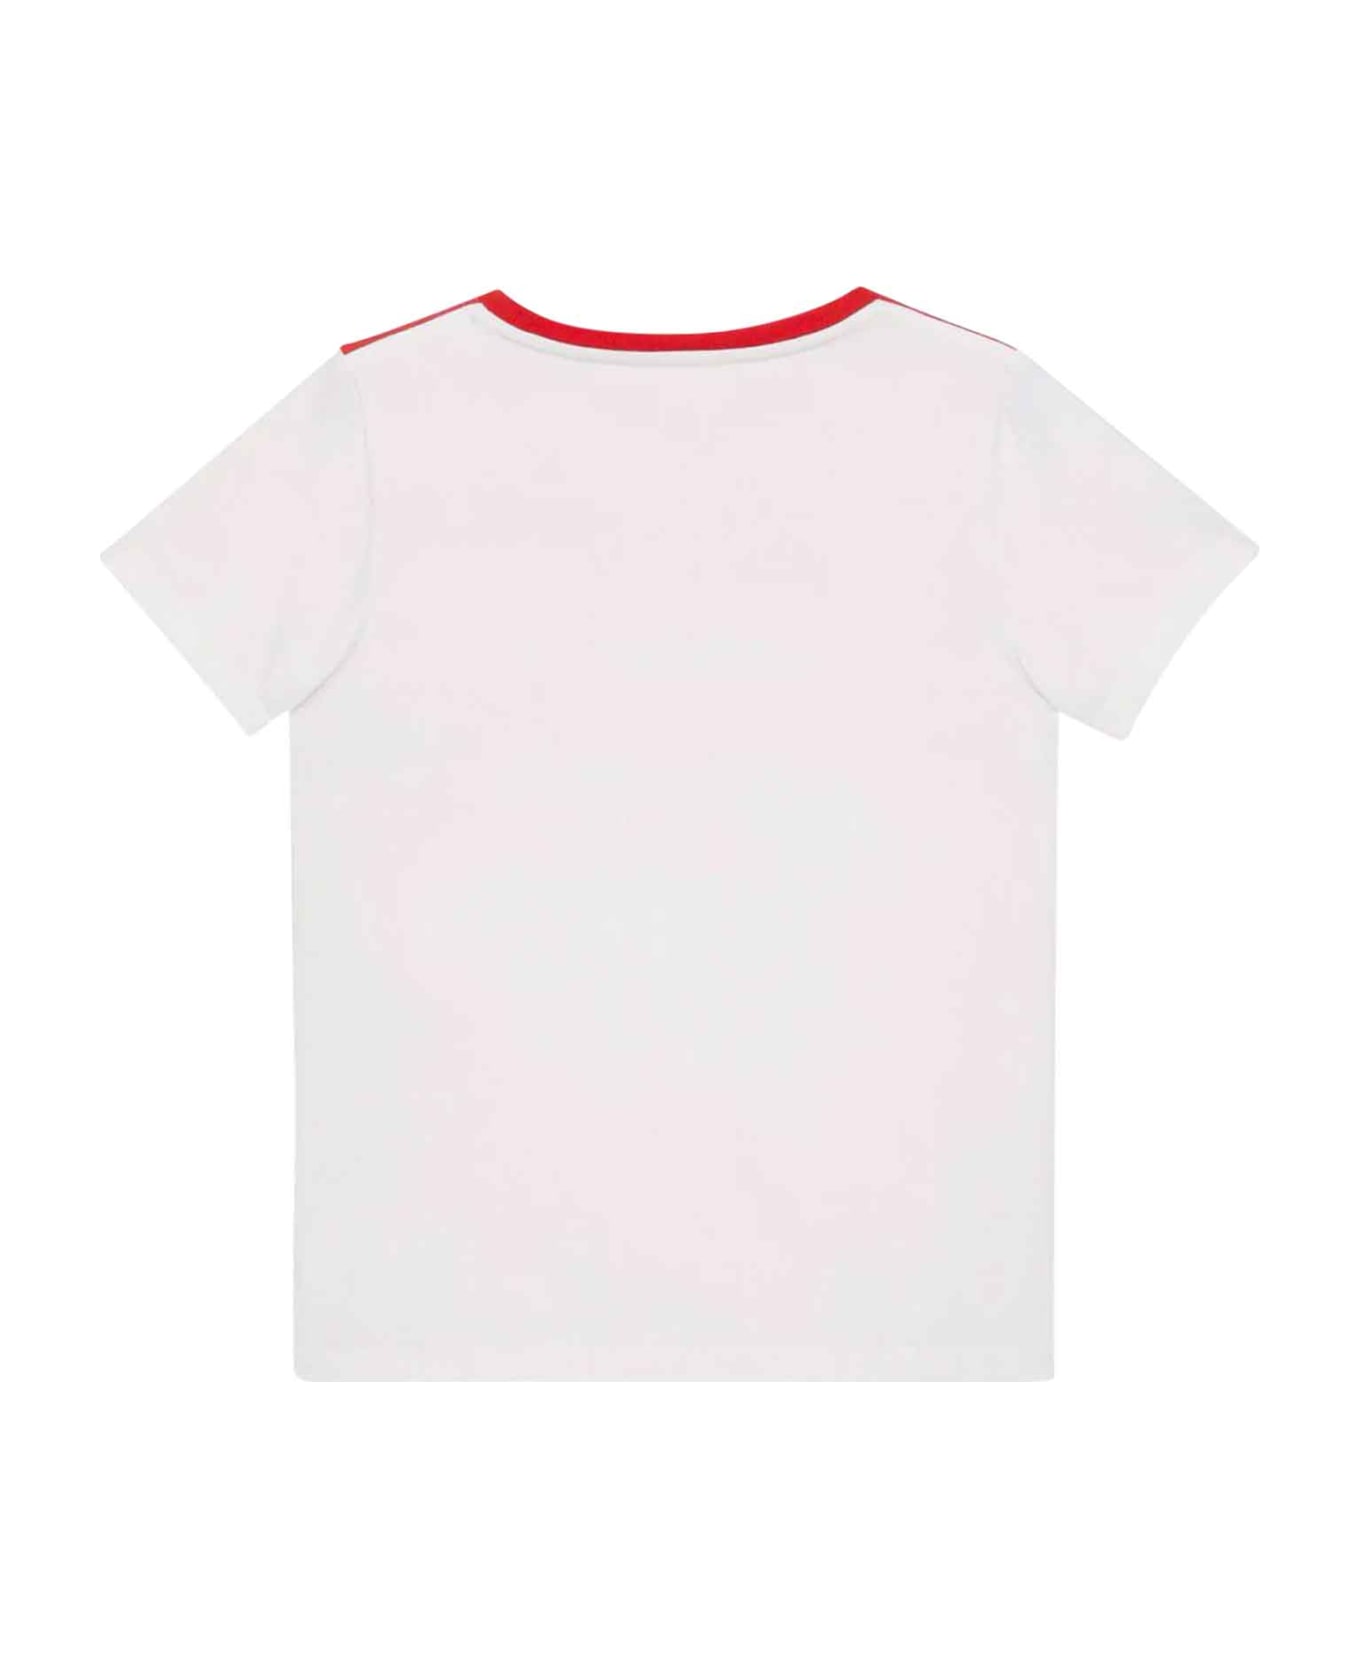 Gucci White Newborn T-shirt - White Red